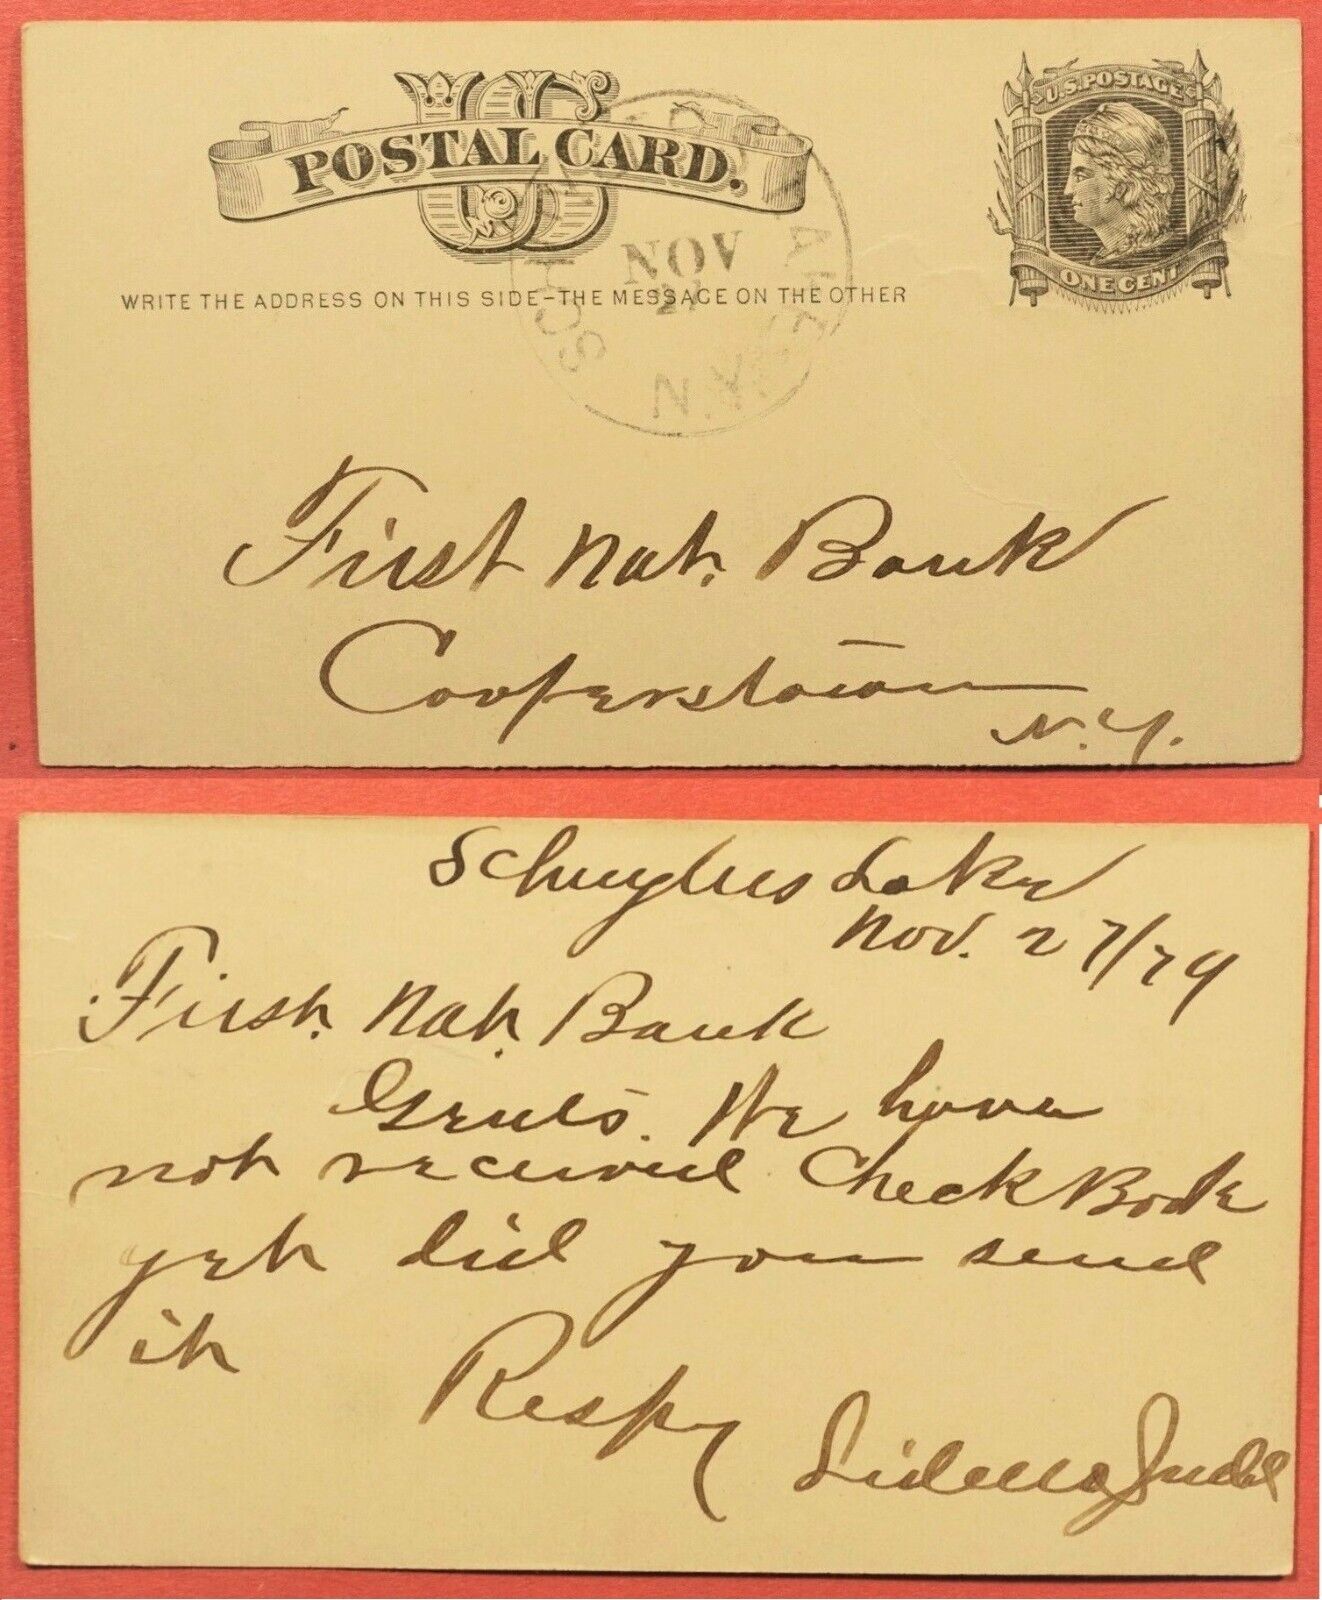 1879 USA POSTAL CARD -  TO FIRST NATIONAL BANK NEW YORK - HAND DATED : NOV 27 79